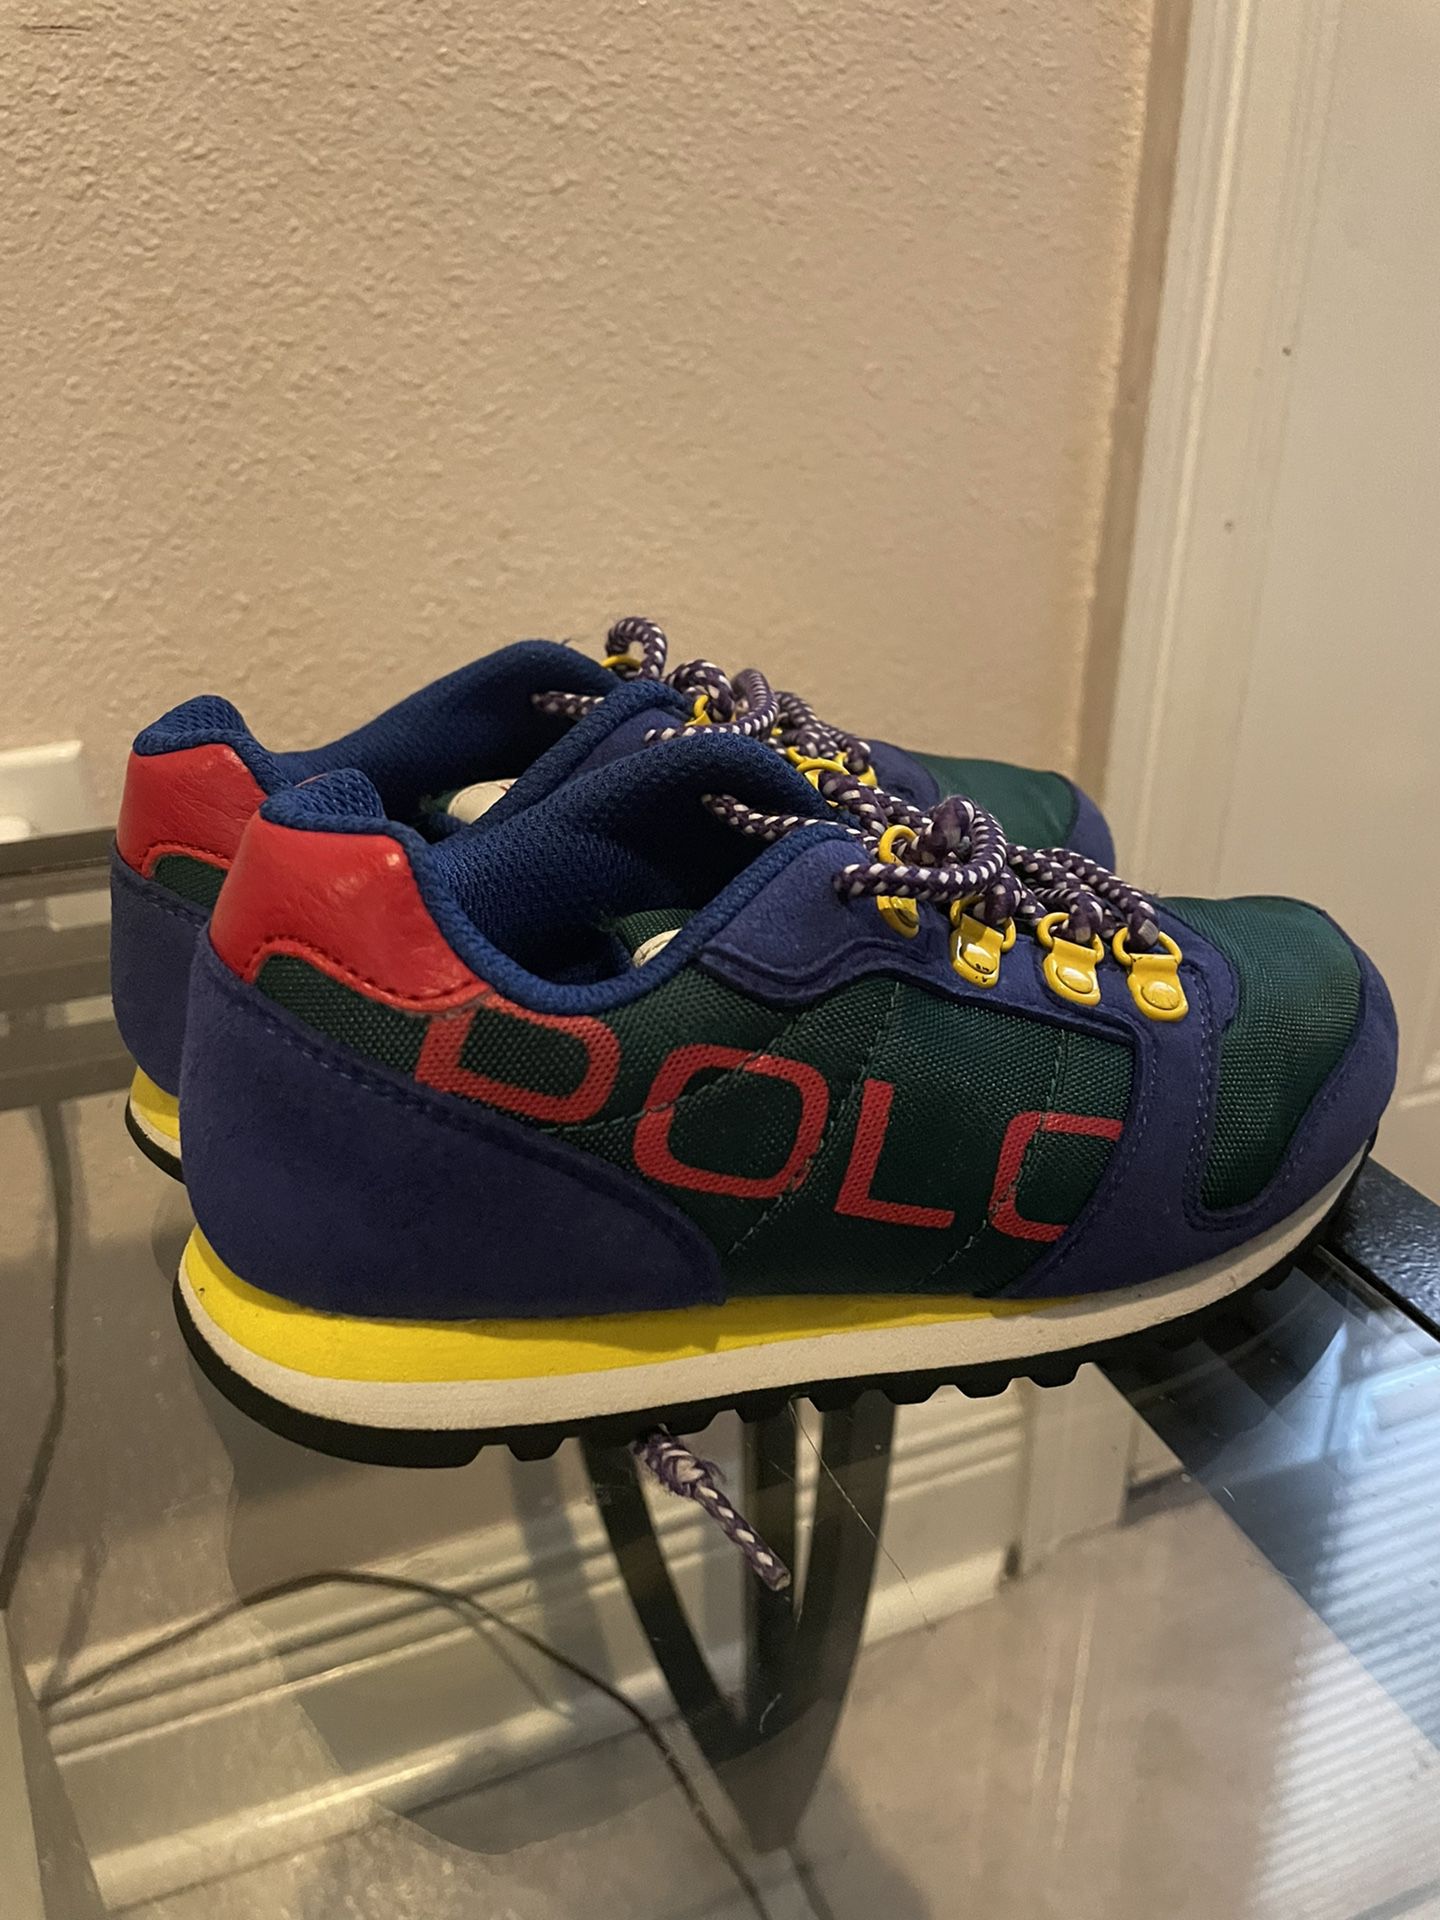 Ralph Lauren Polo Sneakers Size 13 